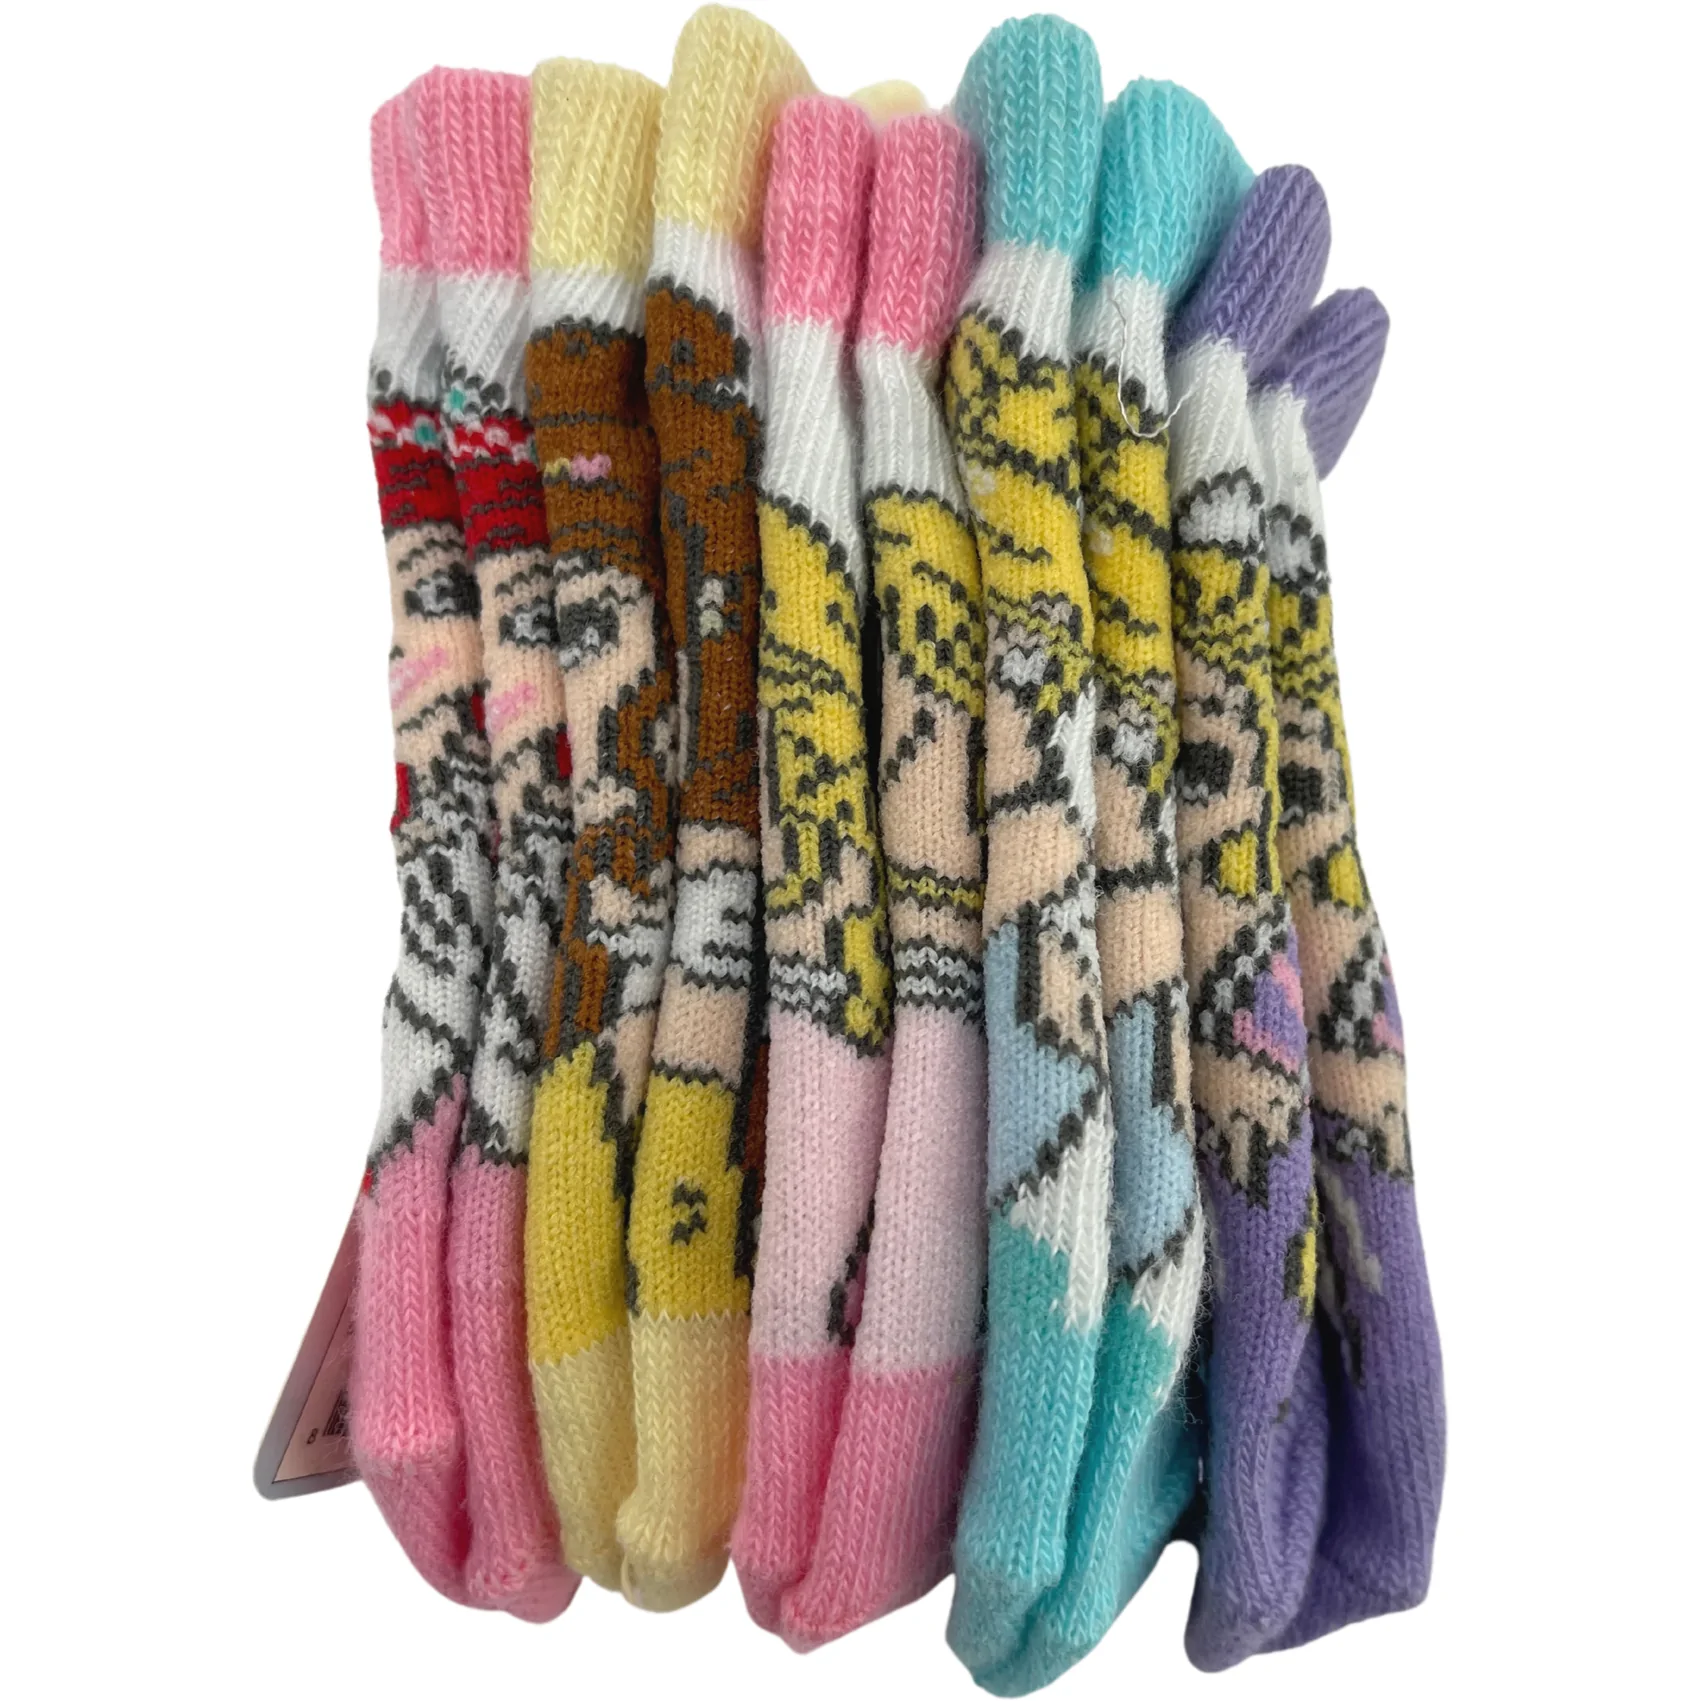 Disney Toddler Girl's Socks / 5 Pairs / Size 4-5.5 / Disney Characters / Various Designs